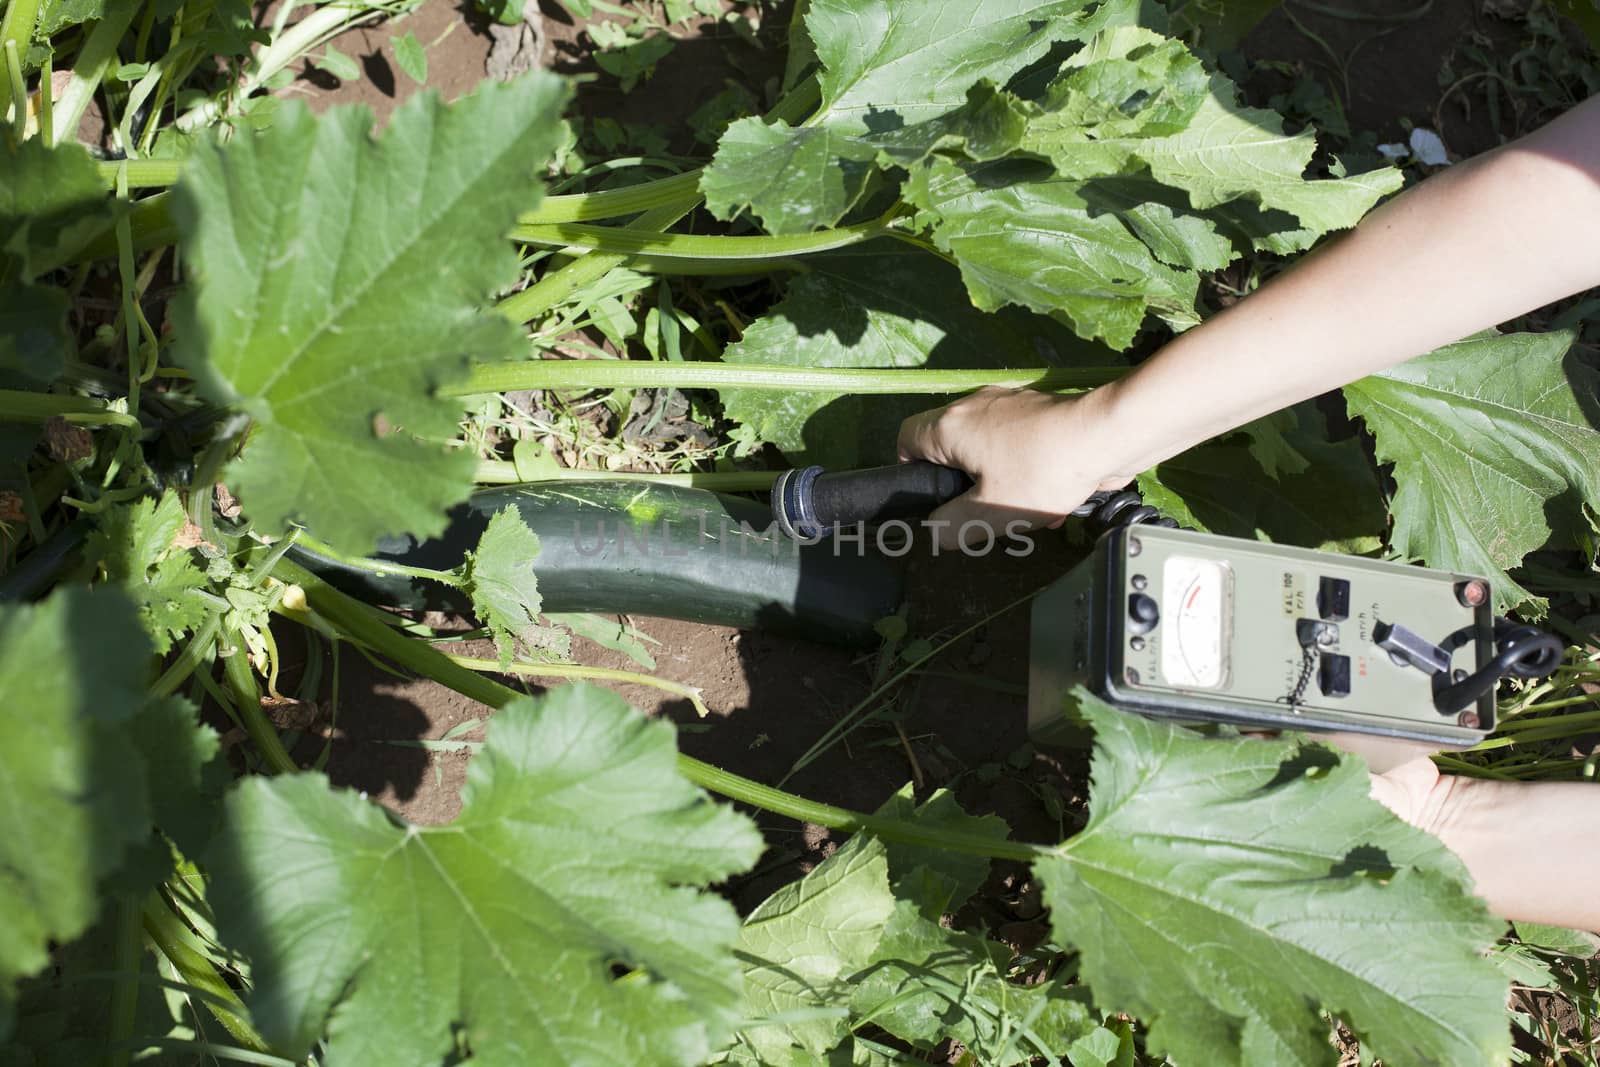 Measuring radiation levels of zucchini